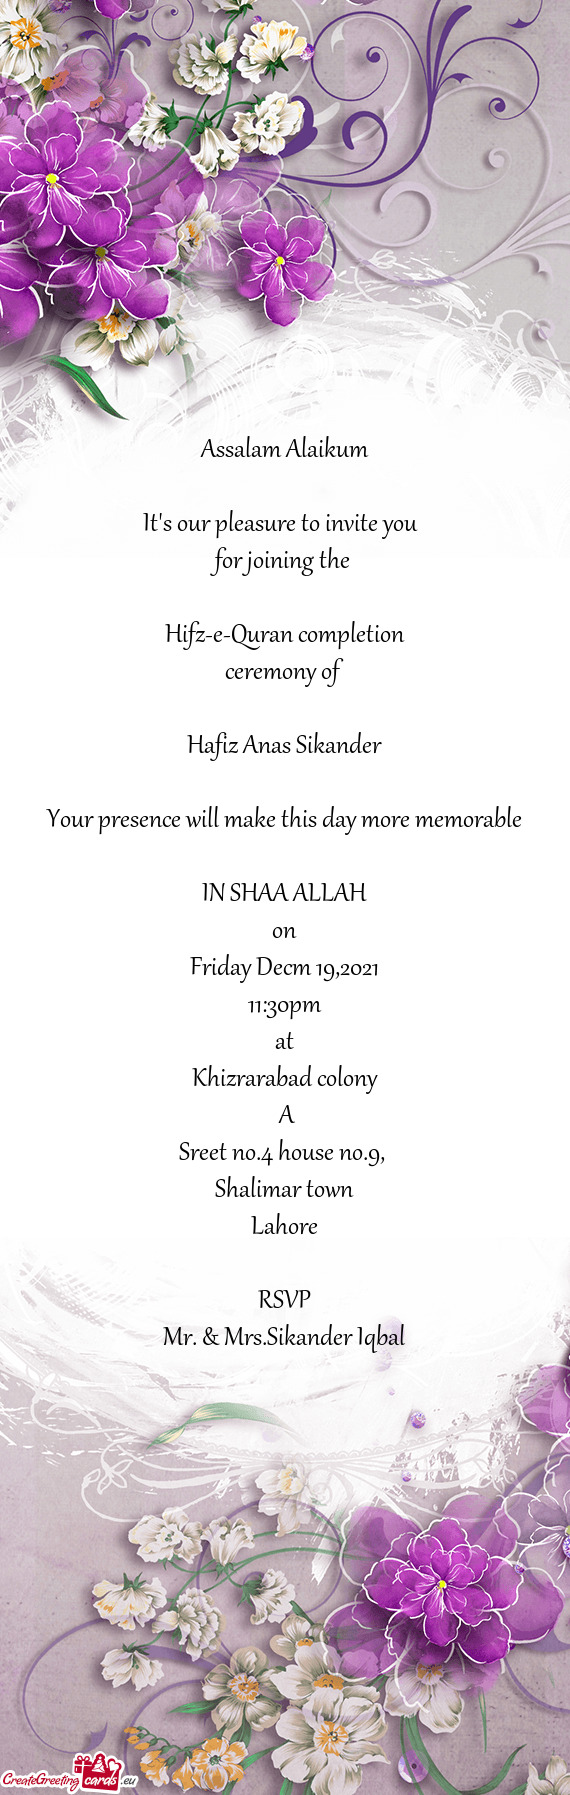 Hifz-e-Quran completion